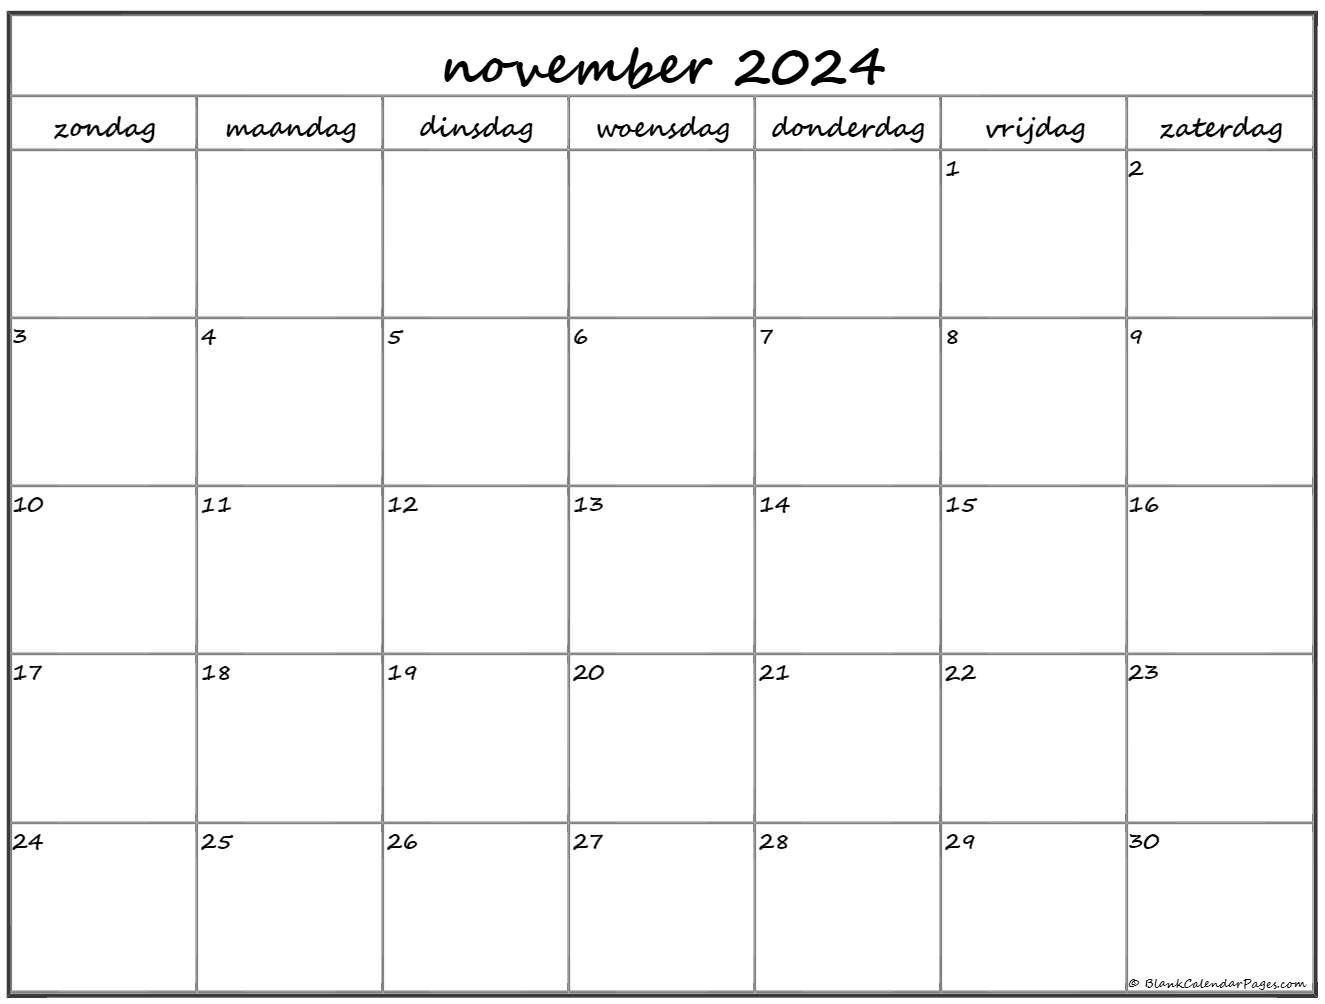 Kalender november 2021